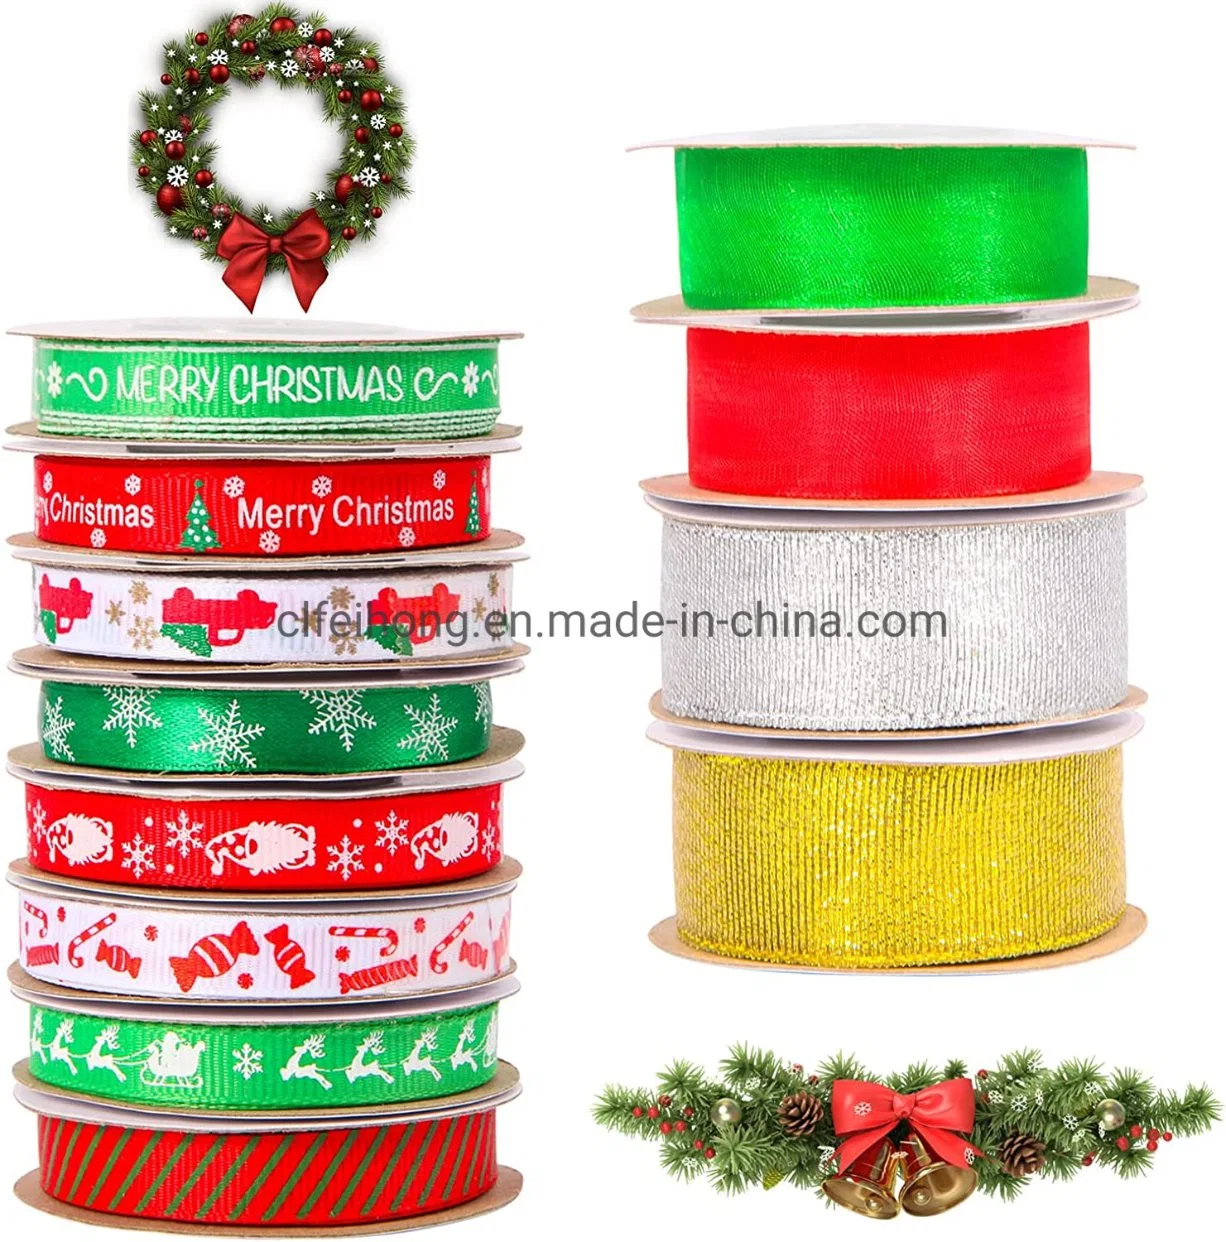 Hot Sale Wholesale Factory Price Printed Ribbon Grosgrain Satin Organza Ribbon Christmas/ Xmas Ribbon for Celebration Gift Box Packing Wrapping Decoration